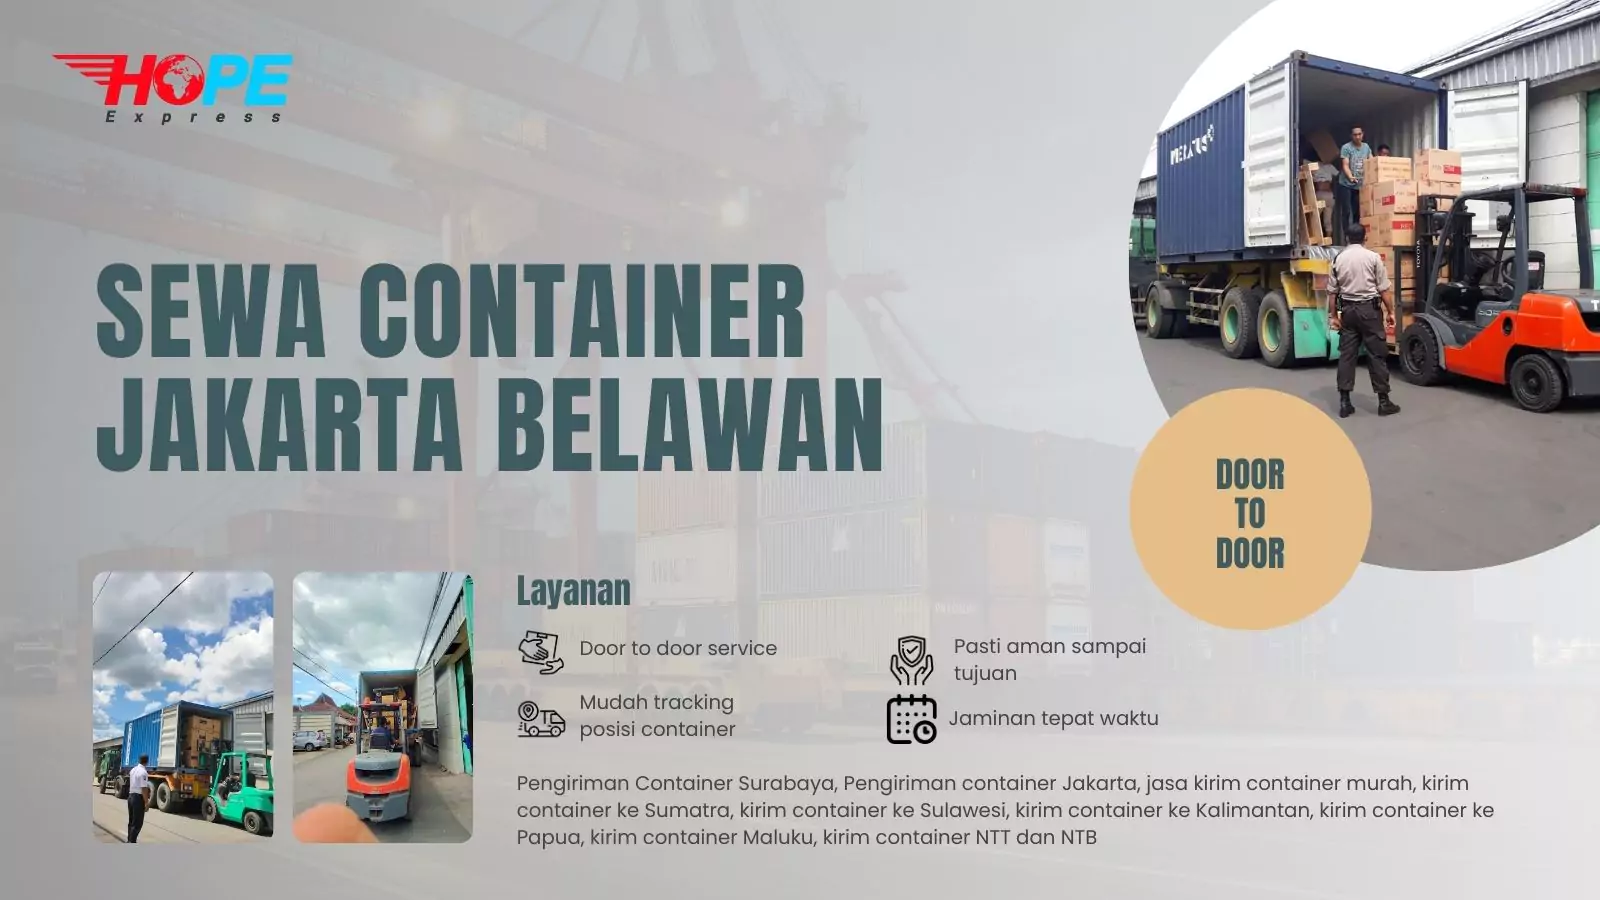 Sewa Container Jakarta Belawan